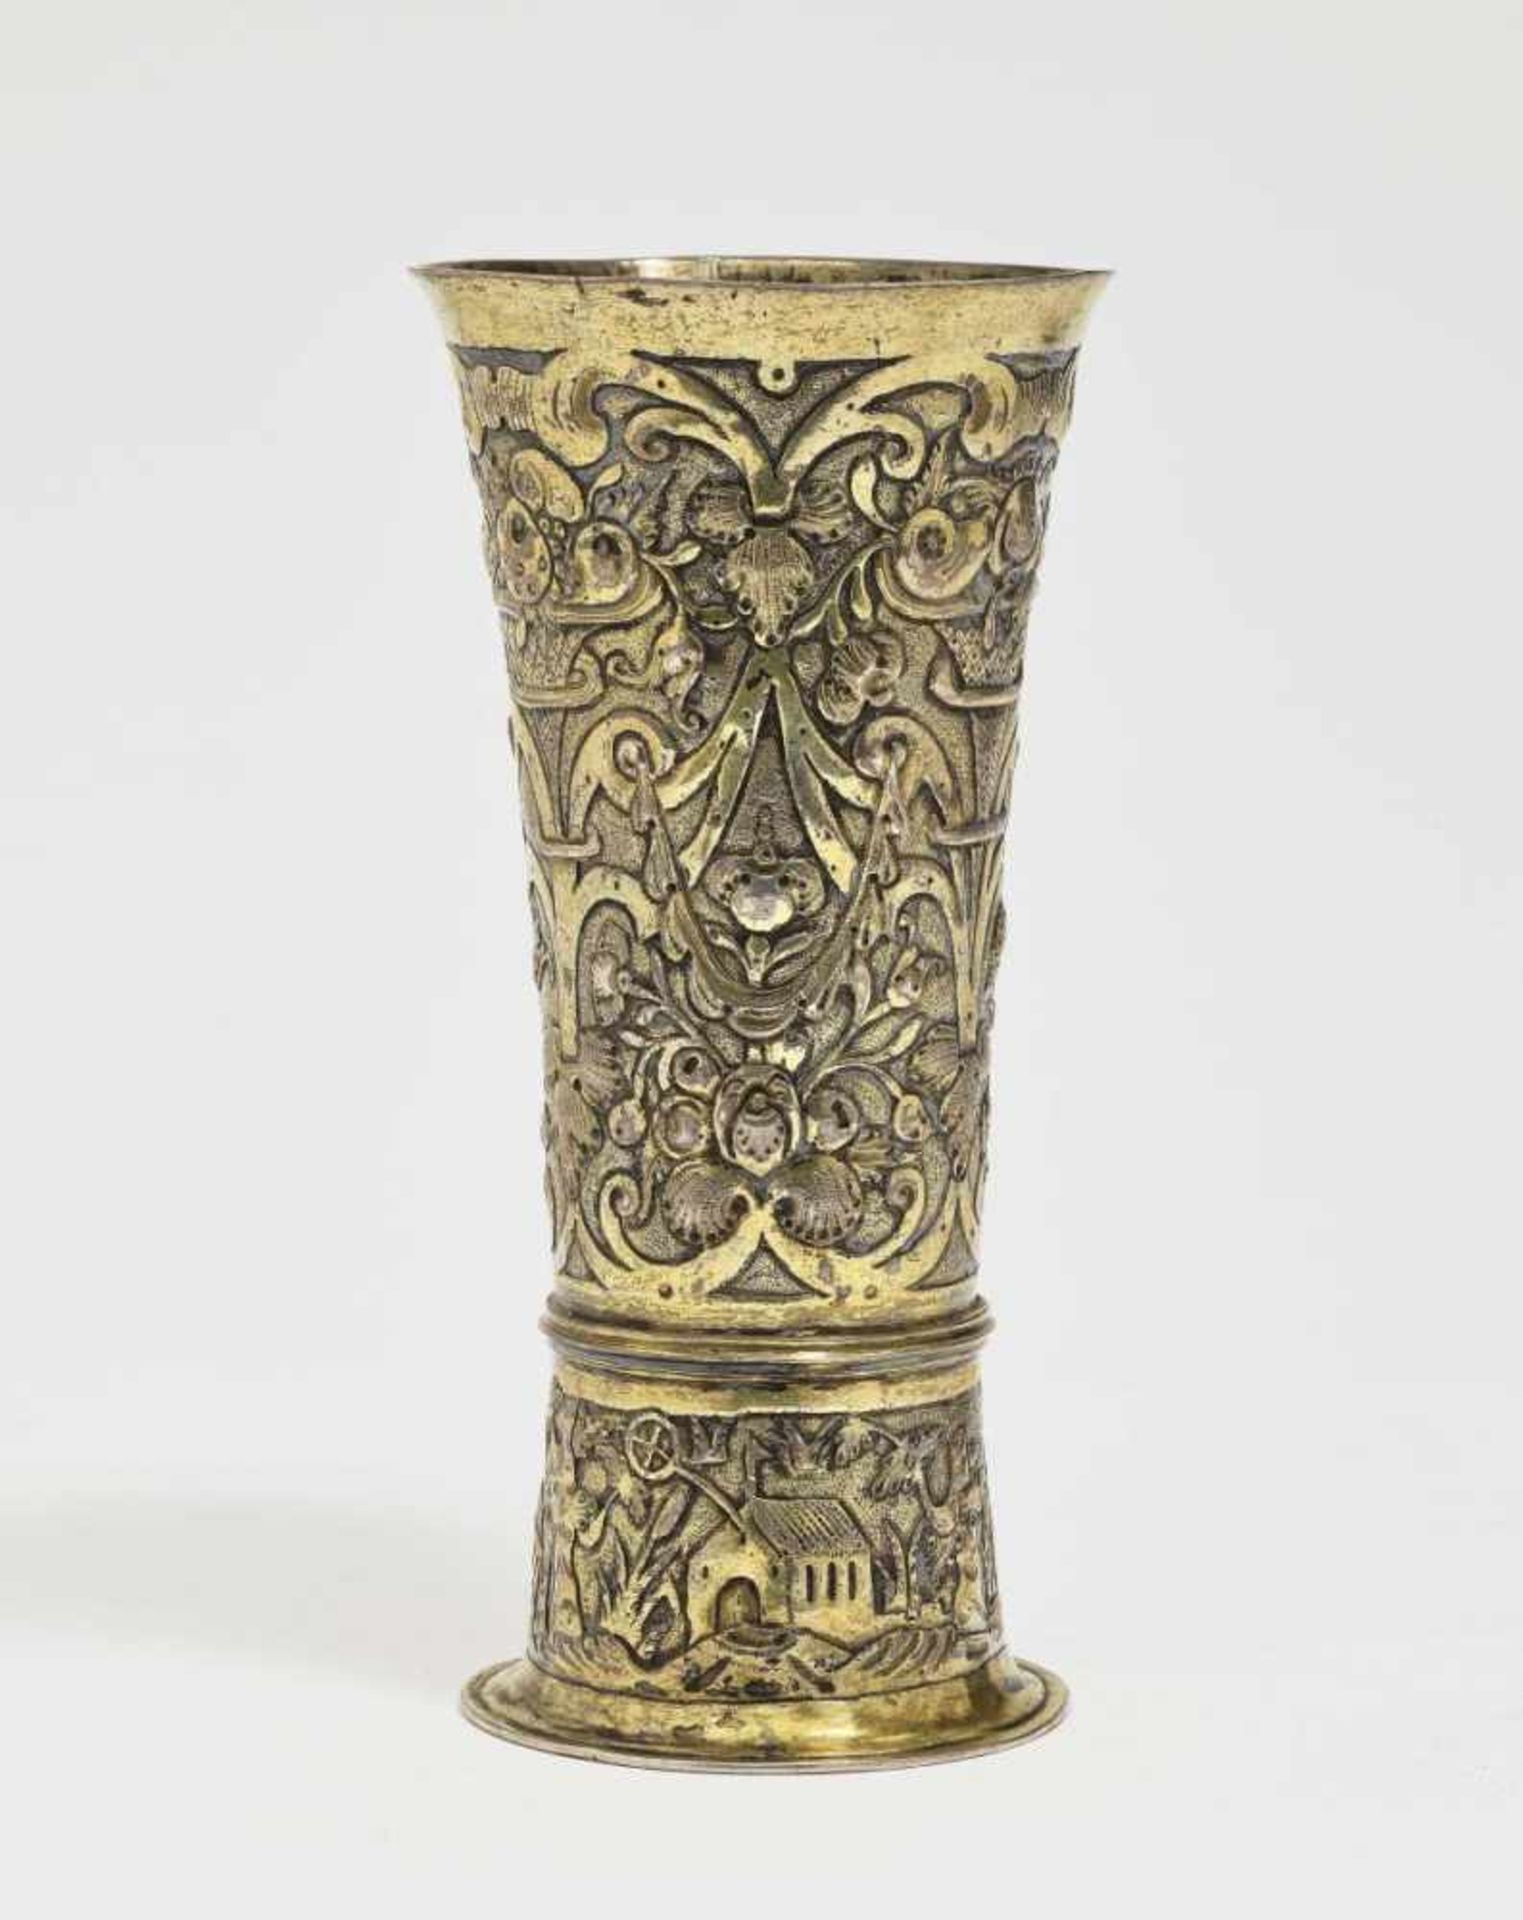 A Silver BeakerKronstadt, 1630 - 1633, Bartholomaeus Igell jun. Silver, gold-plated. Tapering